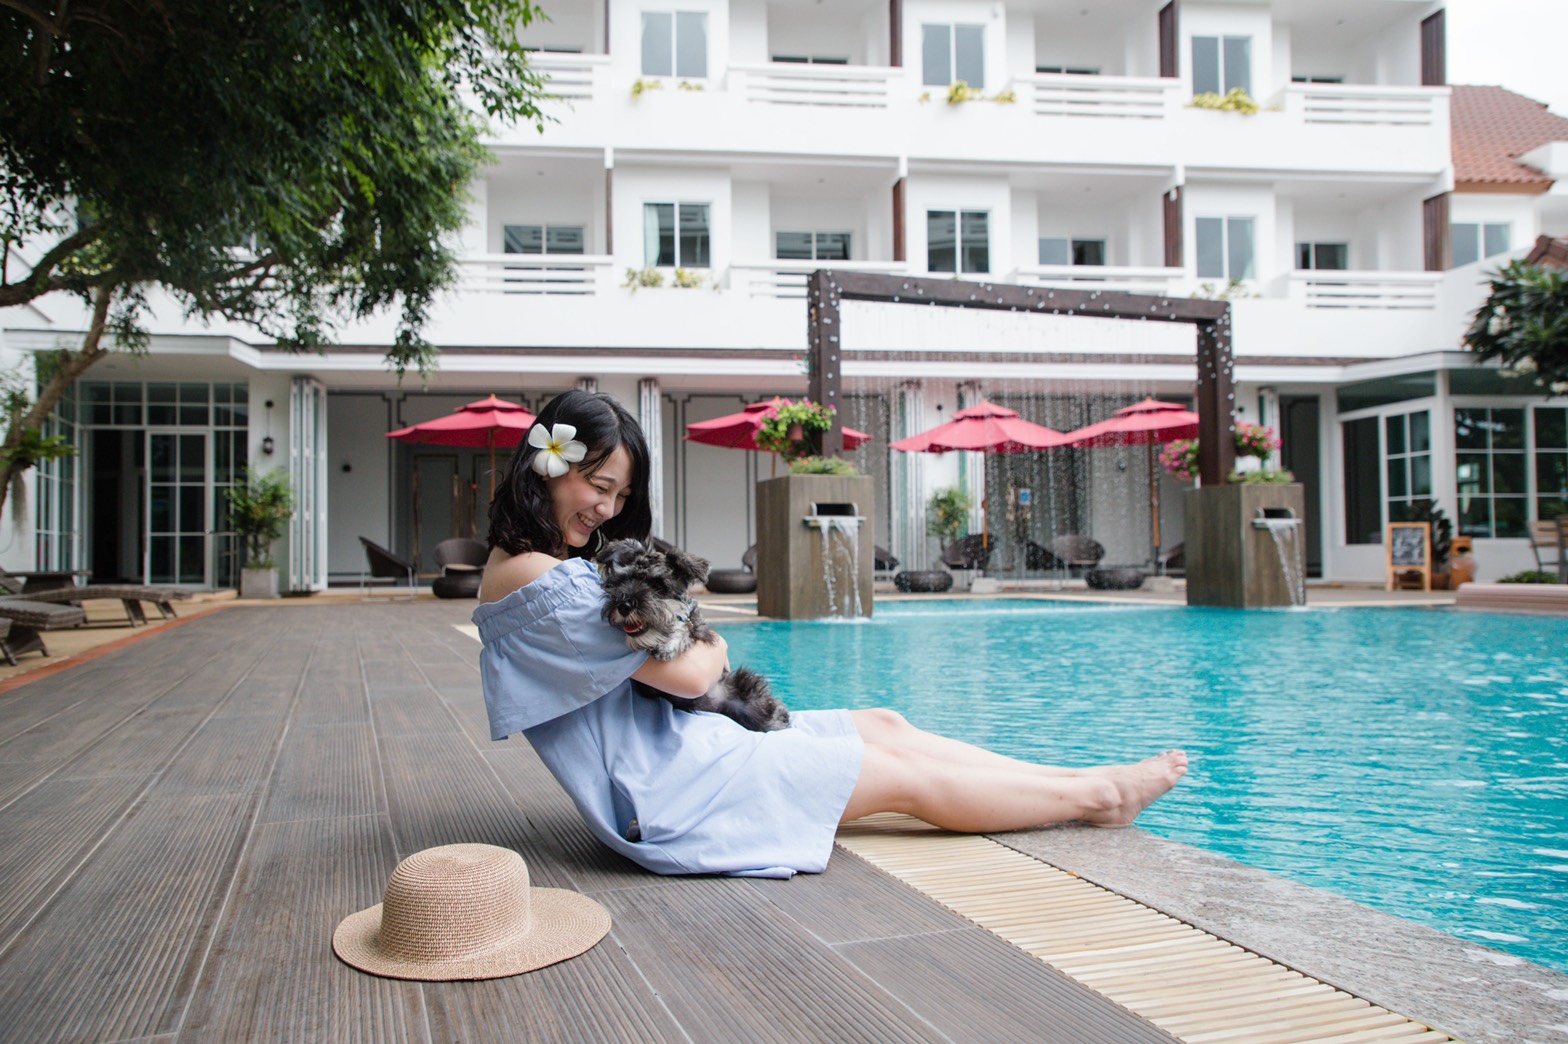 Jerhigh x Hill Fresco Hotel Pattaya โรงแรมหมาสัตว์เลี้ยงพักได้ พัทยา ฟรี!ค่านำเข้าสัตว์เลี้ยง ถึง 30 พฤศจิกายน 2564  มีบริการเบาะนอนน้องหมาและขนมแถมฟรีให้อีกด้วย